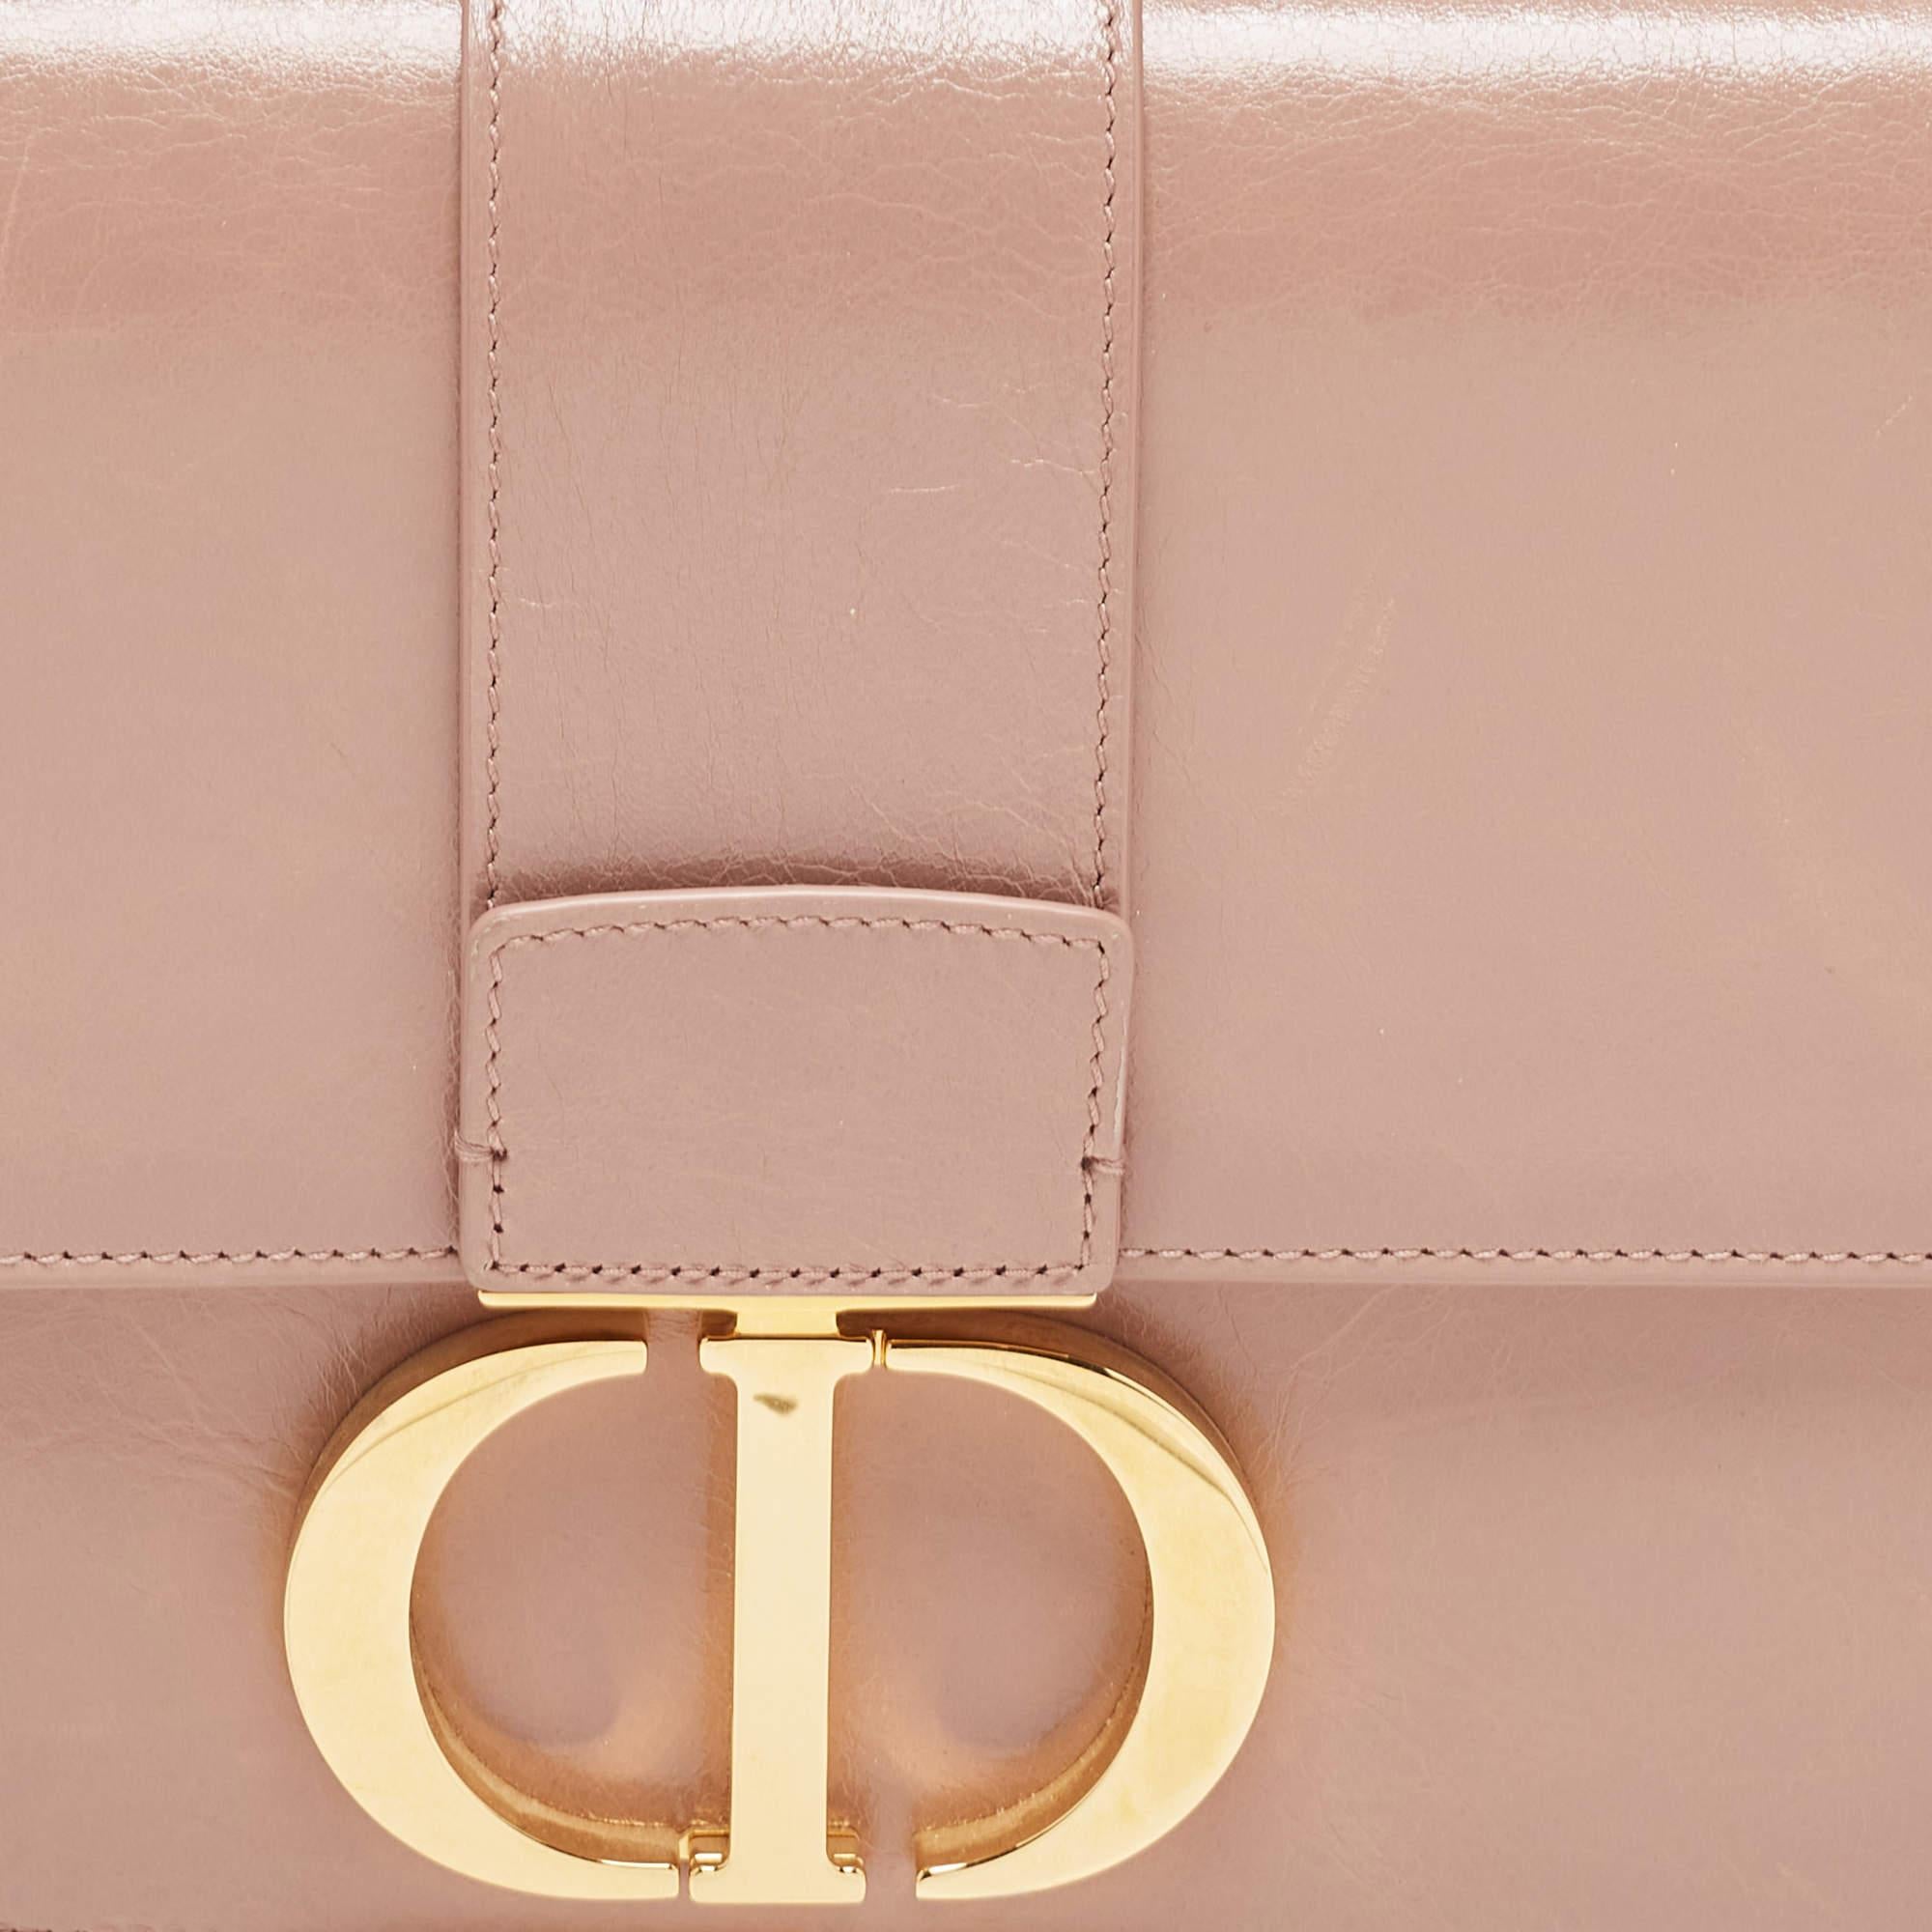 Dior Beige Leather 30 Montaigne Shoulder Bag 10